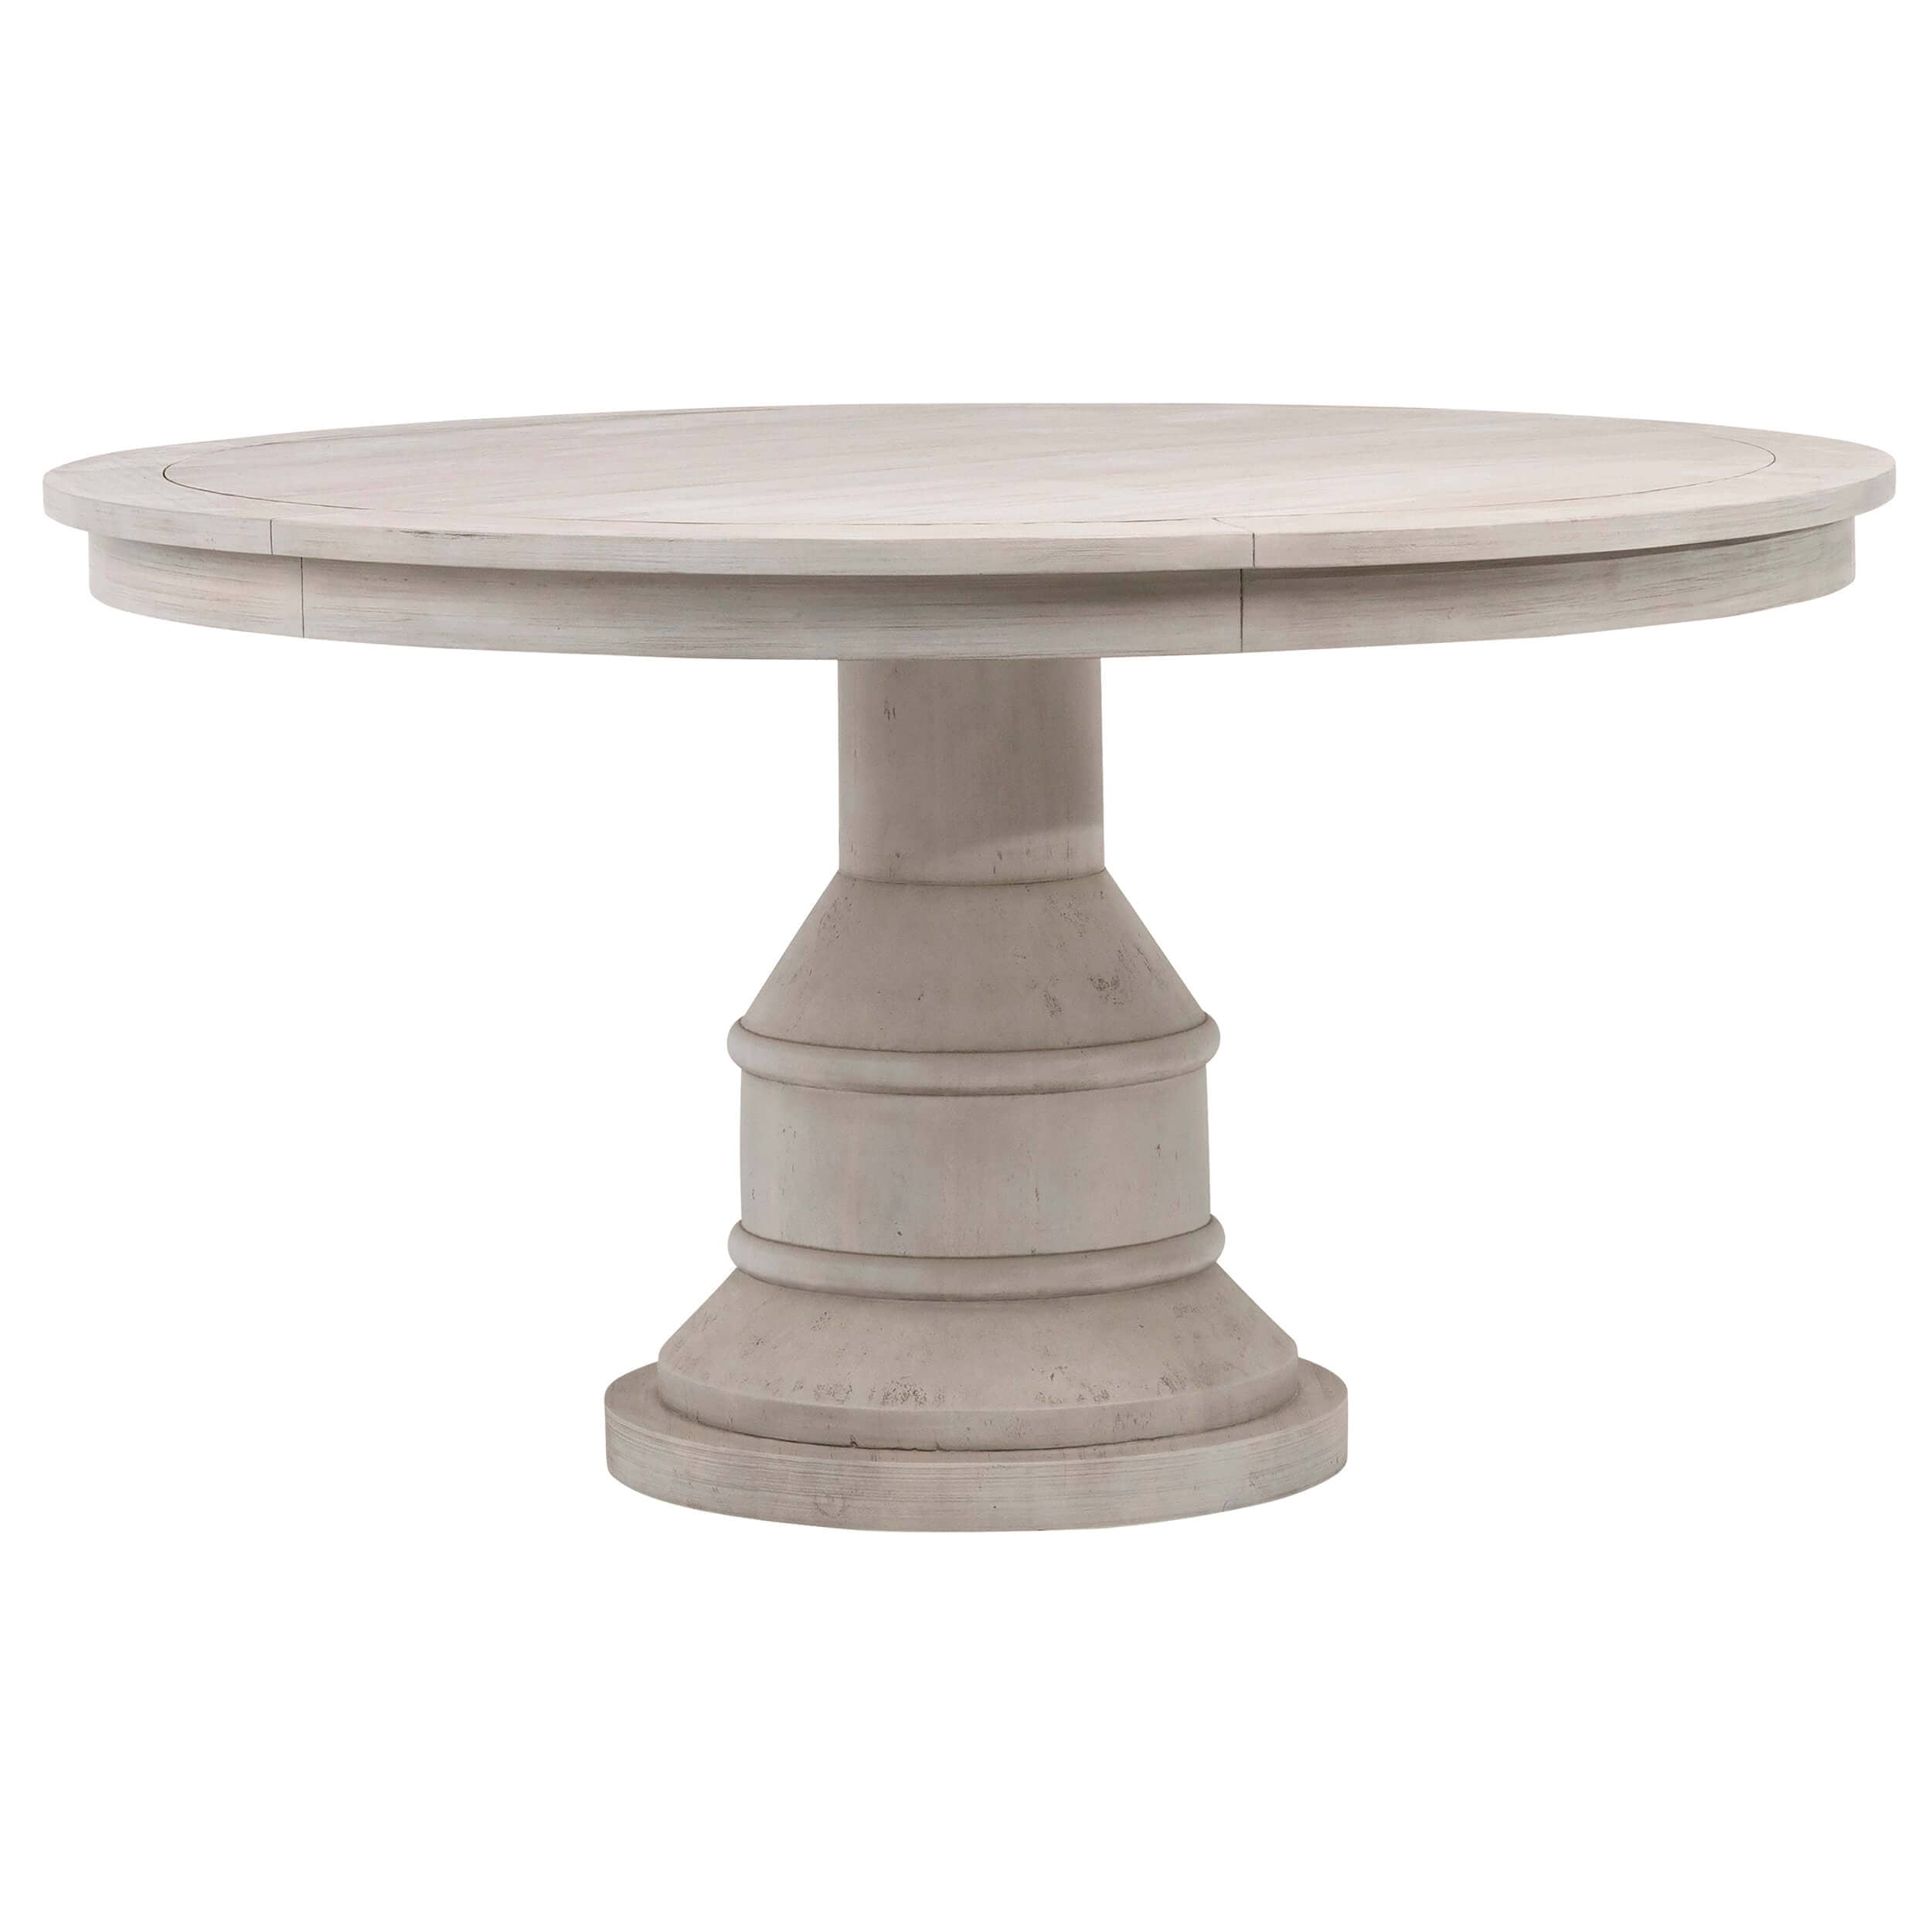 Image of Arundel Round Dining Table, White Wash